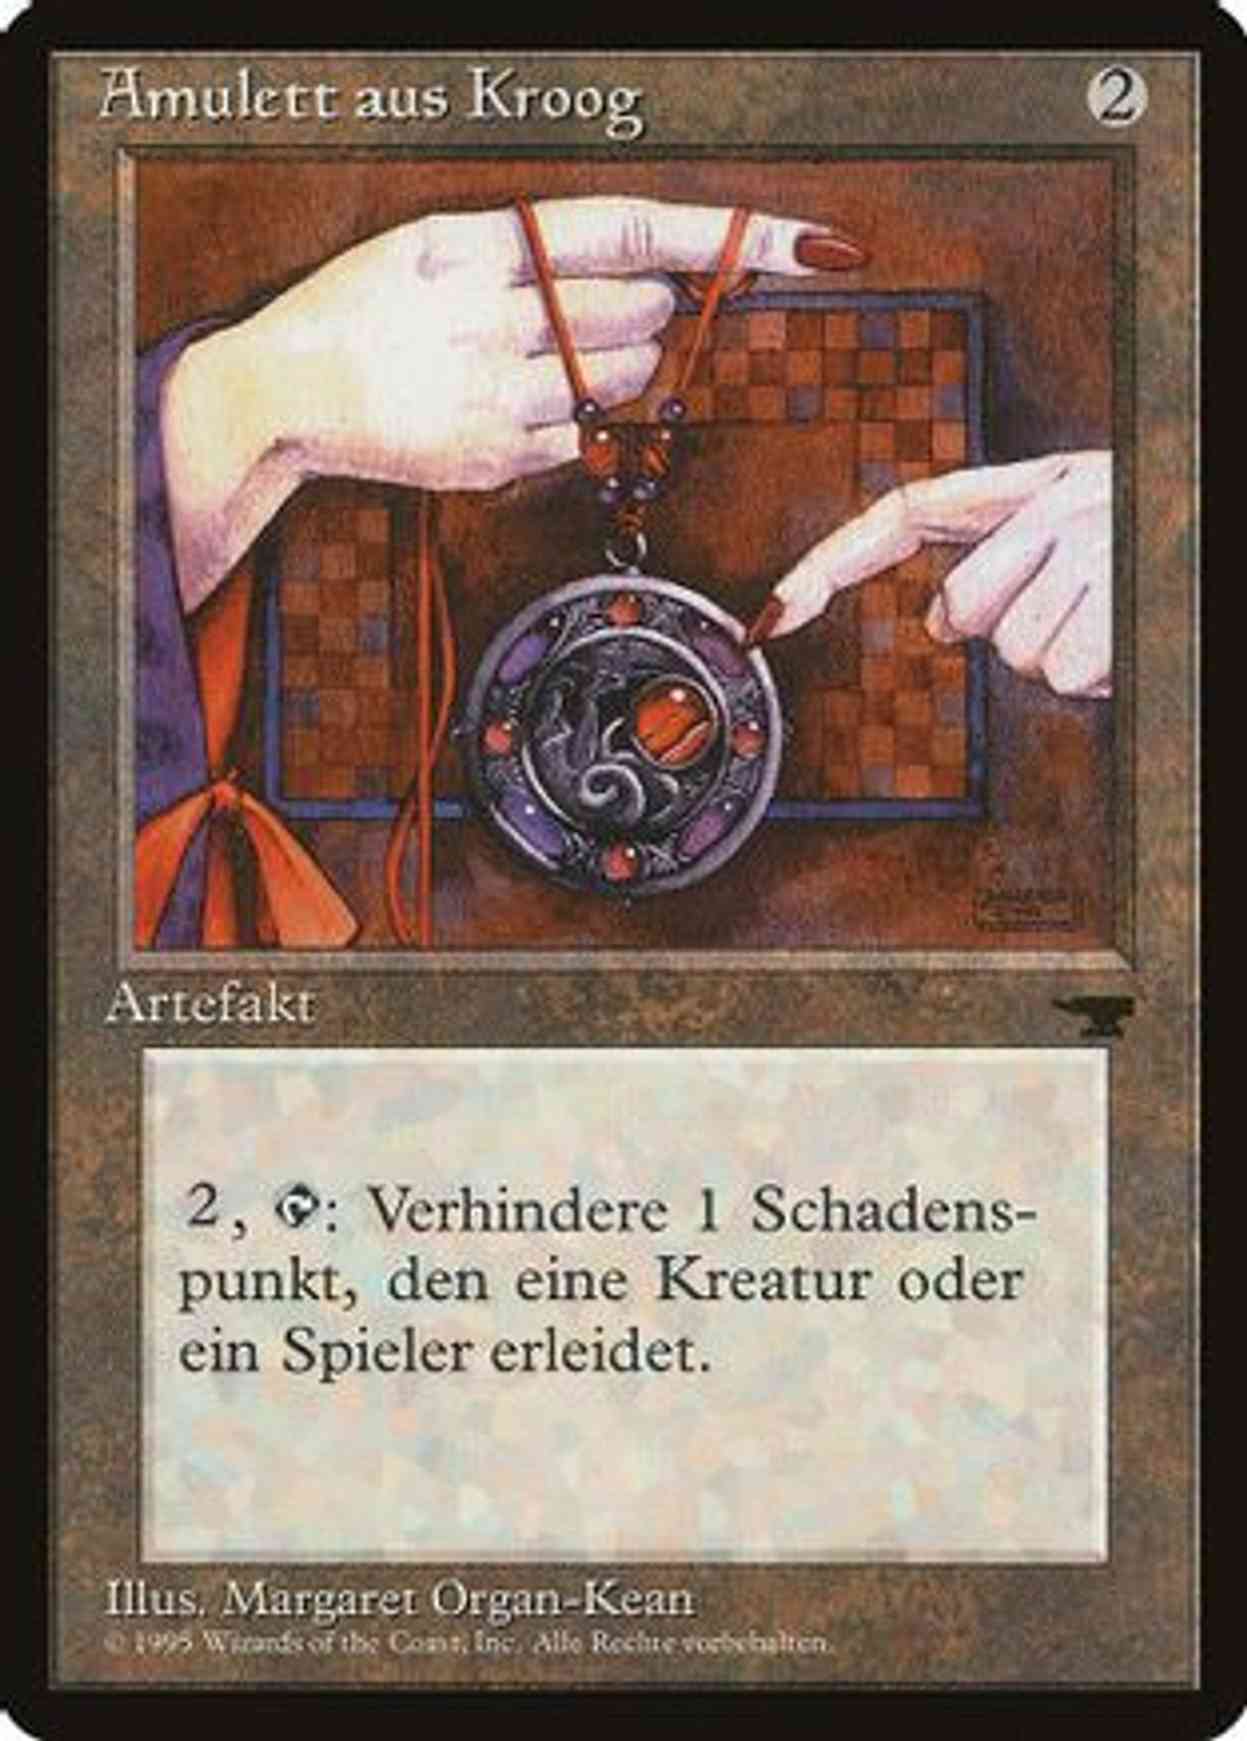 Amulet of Kroog (German) - "Amulett aus Kroog" magic card front